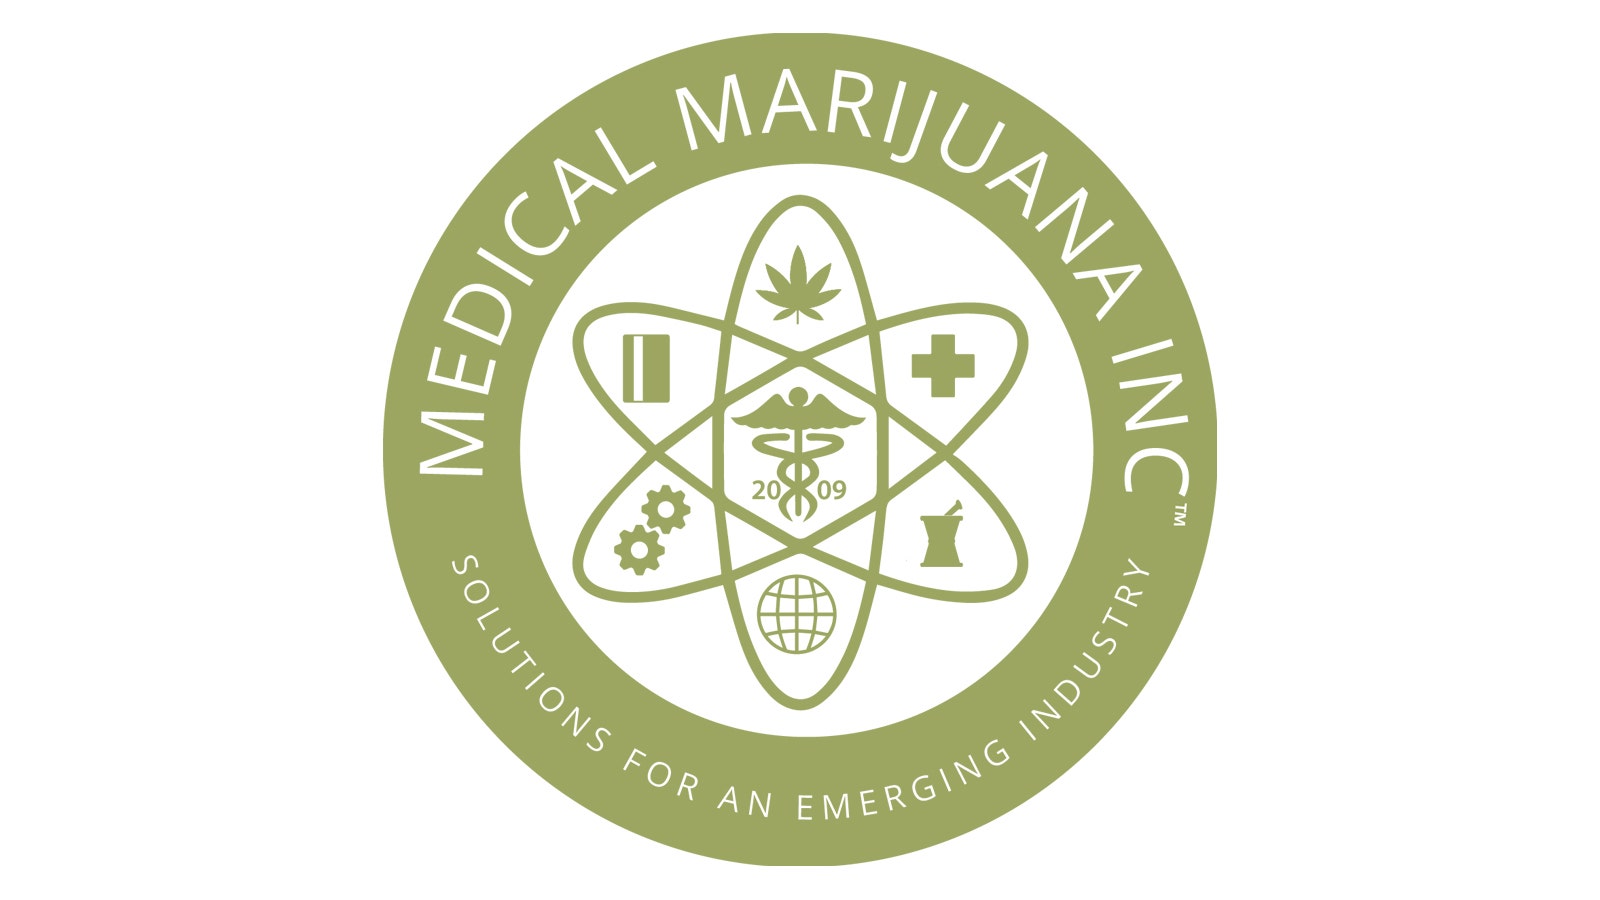 Medical Marijuana Inc's Stock Down On Q3 Results And Slight Revenue Decline